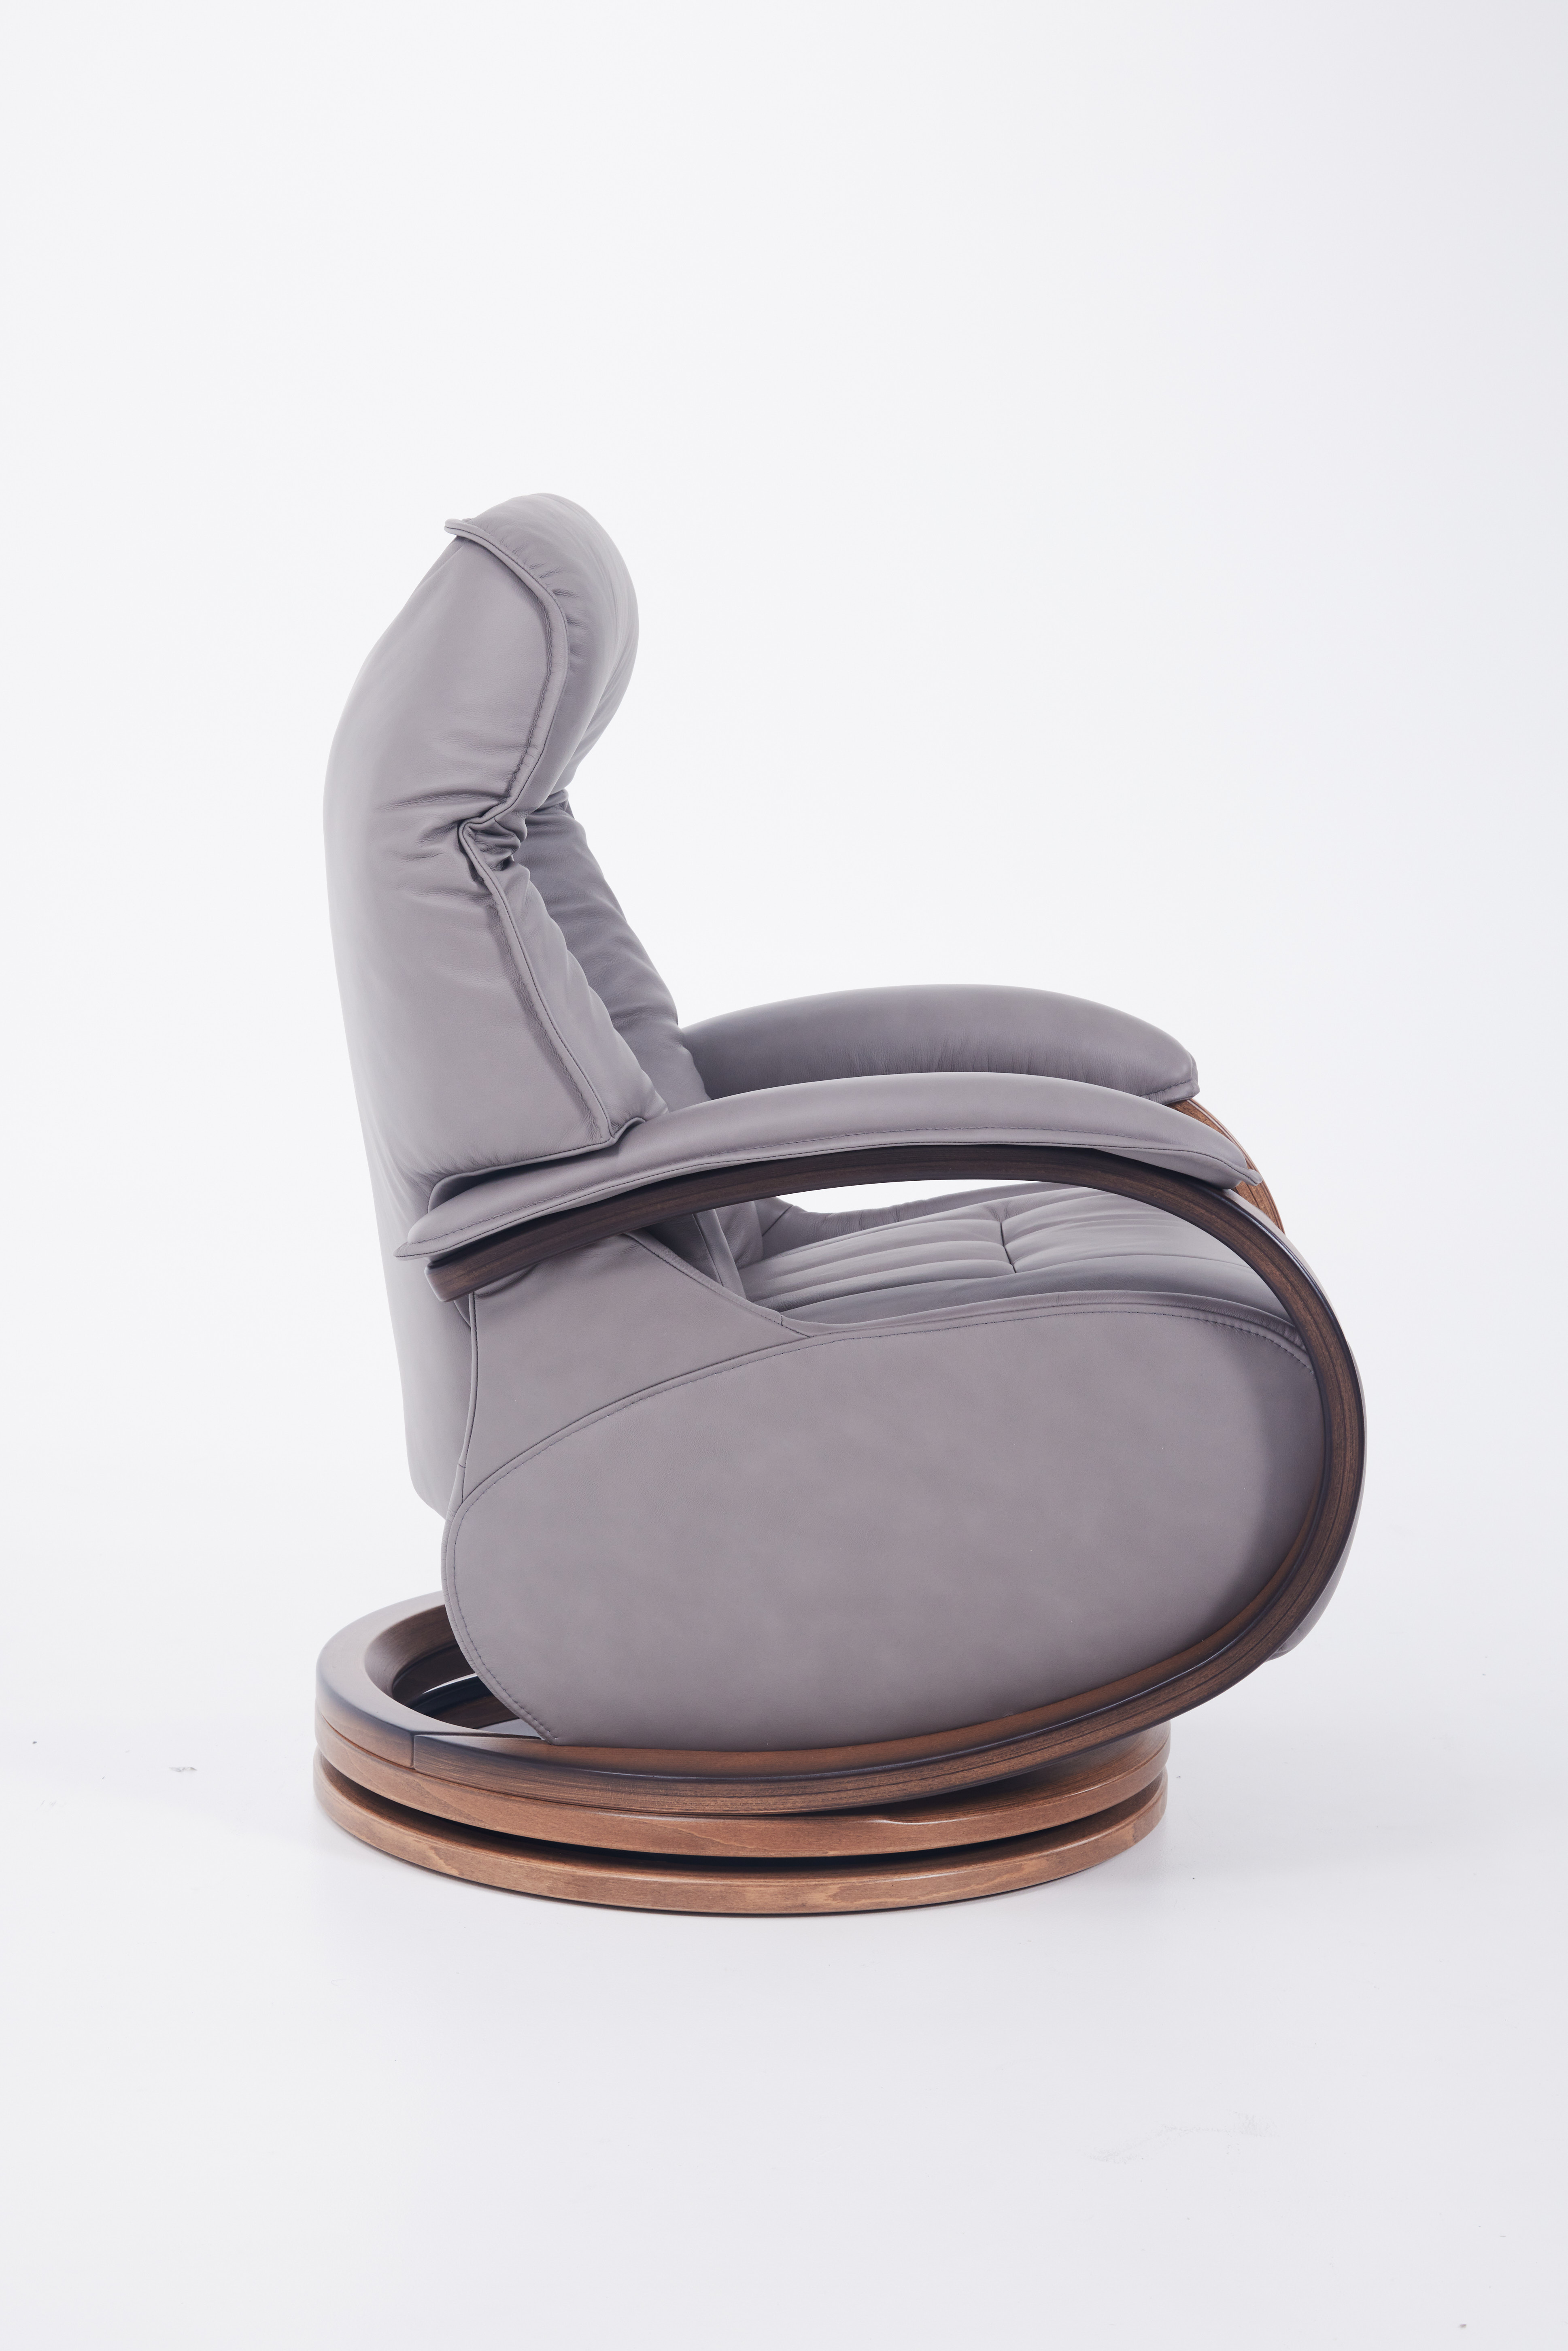 Cumuly Mosel Maxi Manual Chair